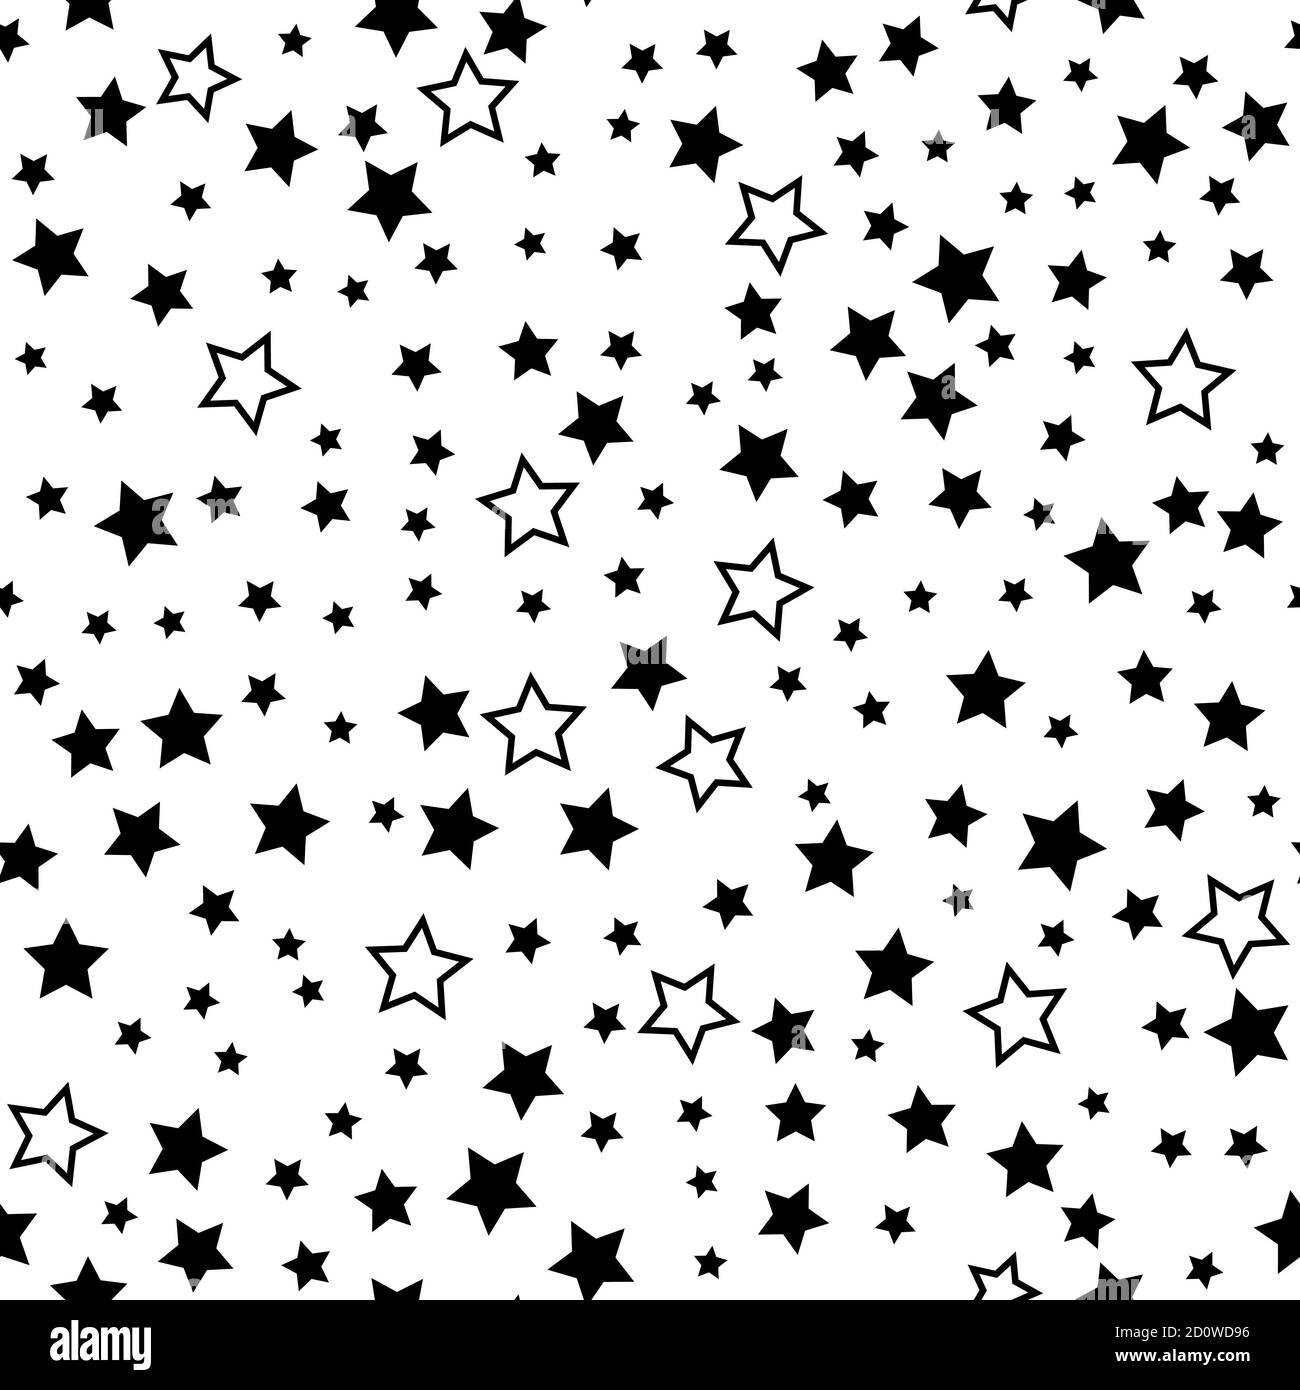 Star seamless pattern. Black stars on white retro background